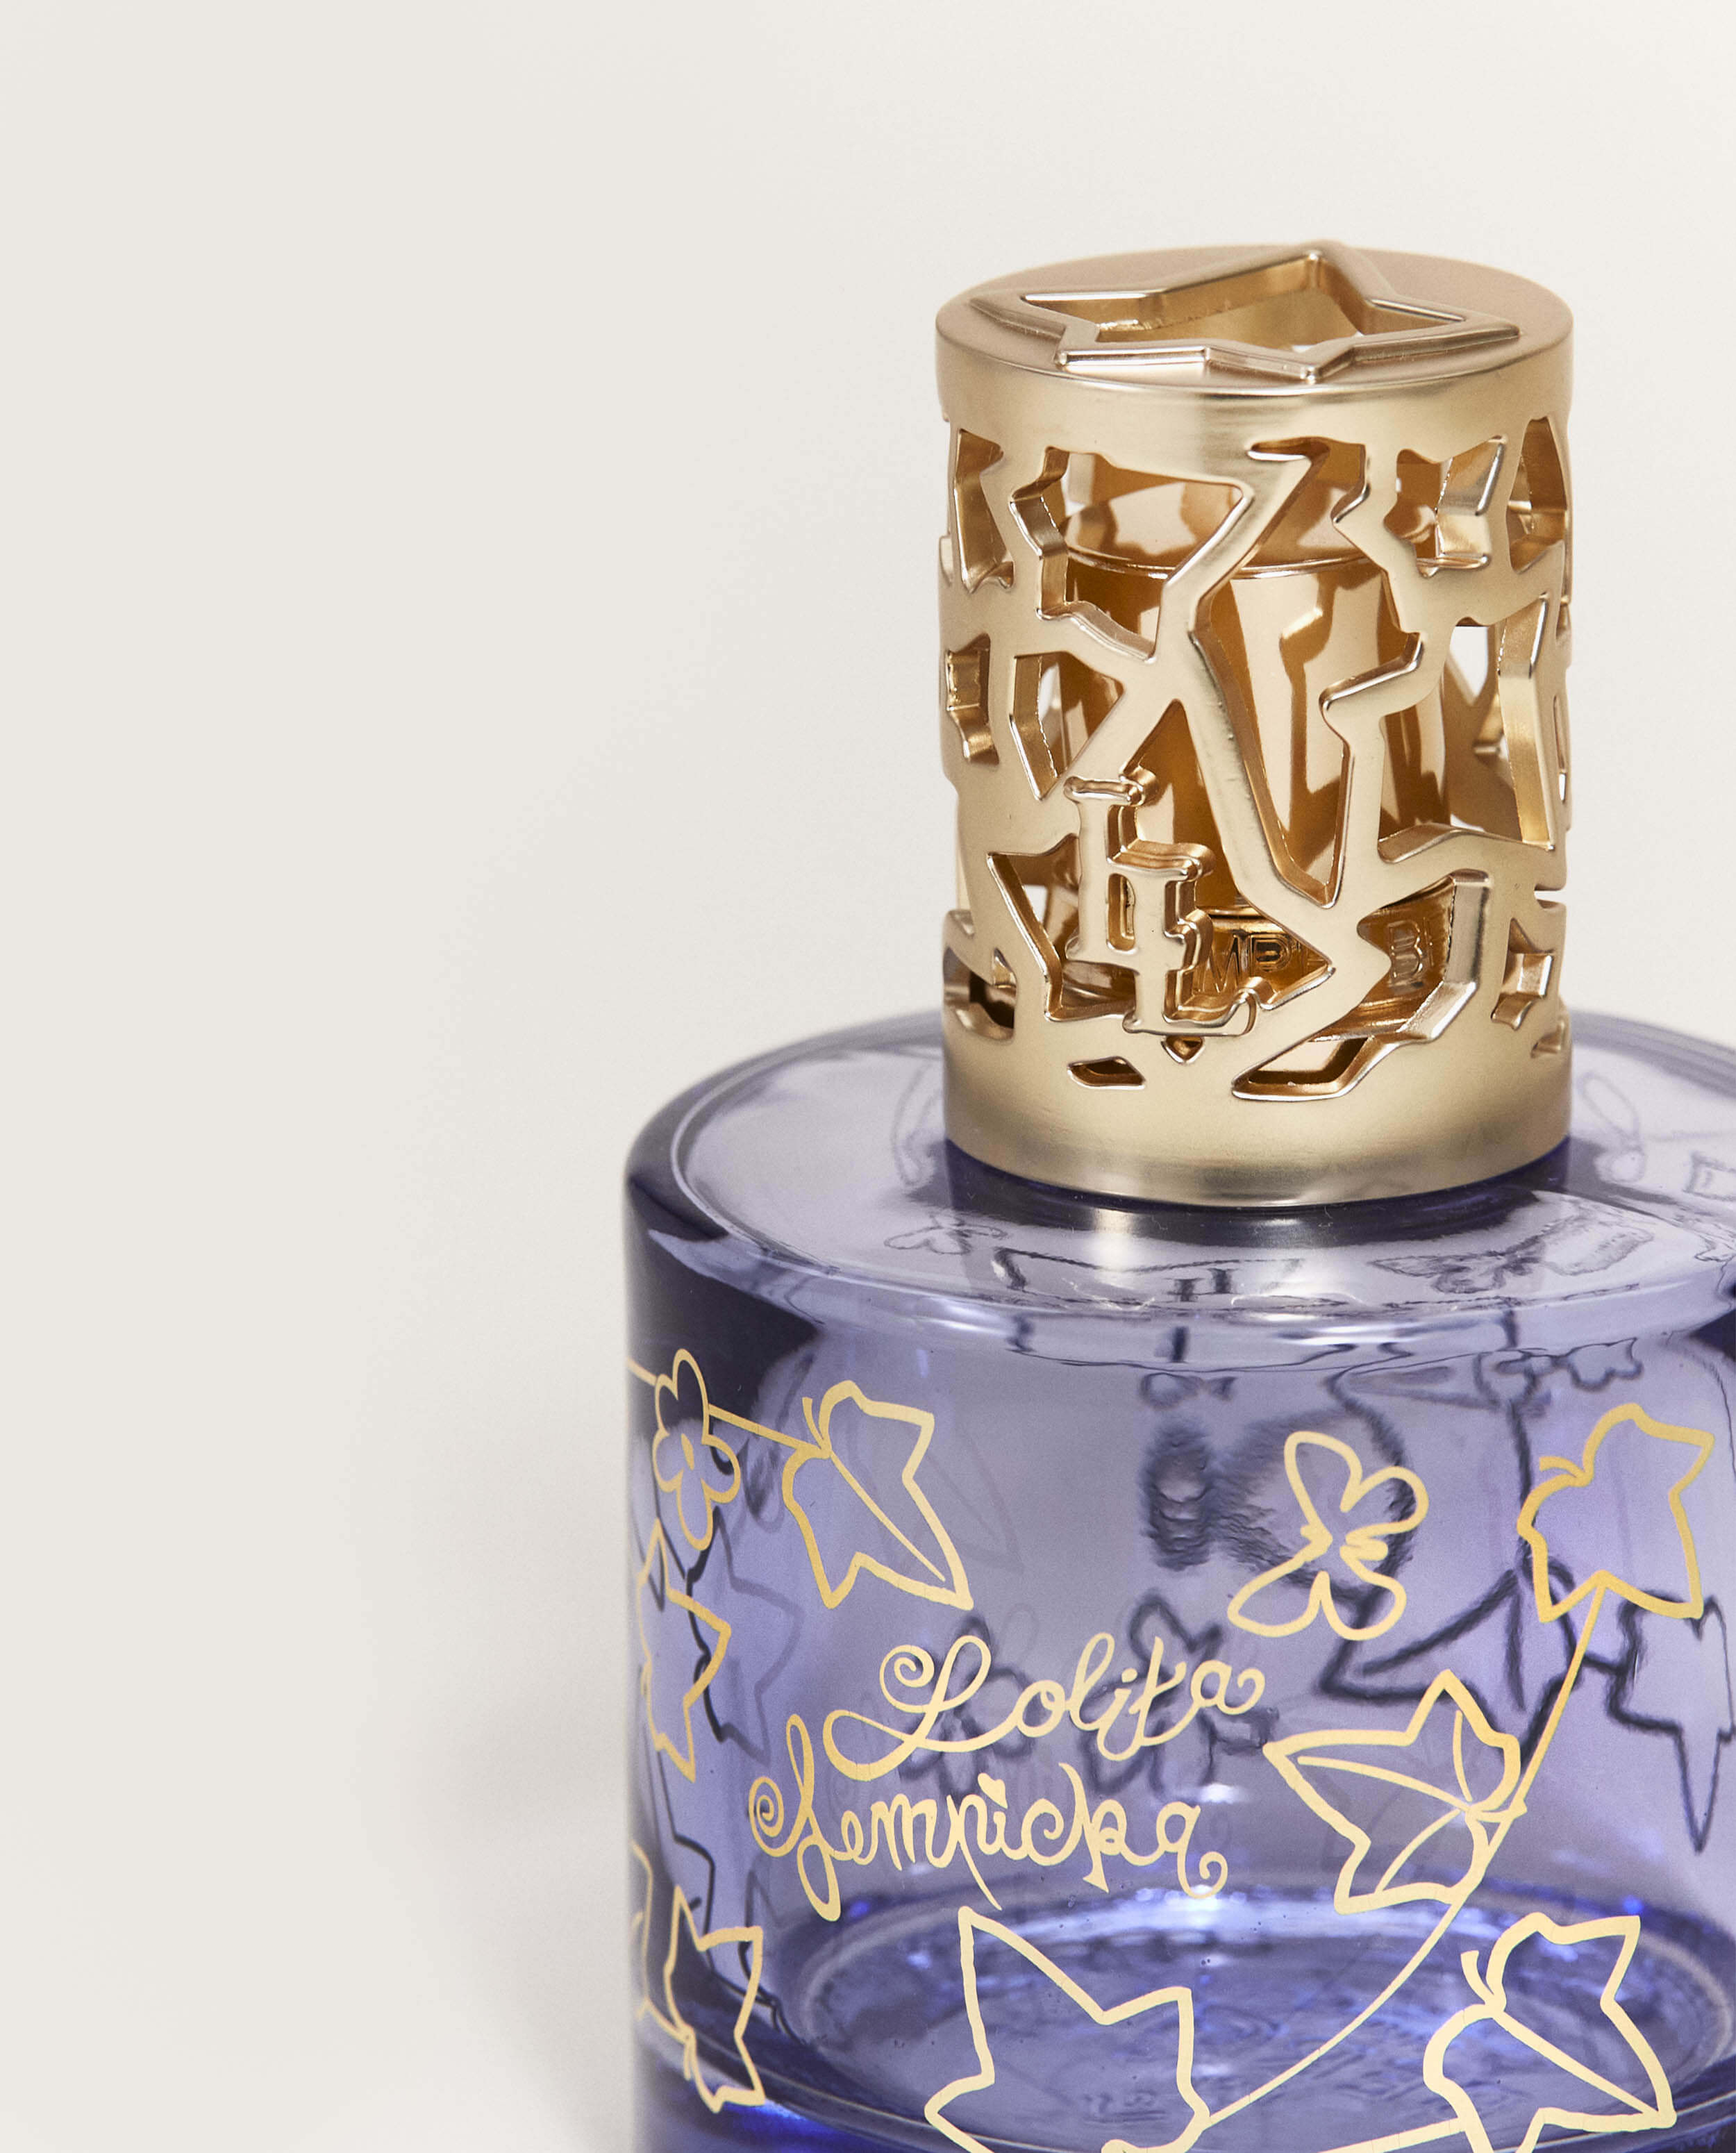 Lolita Lempicka Home Fragrance Lamp Gift Set in Blue Glass